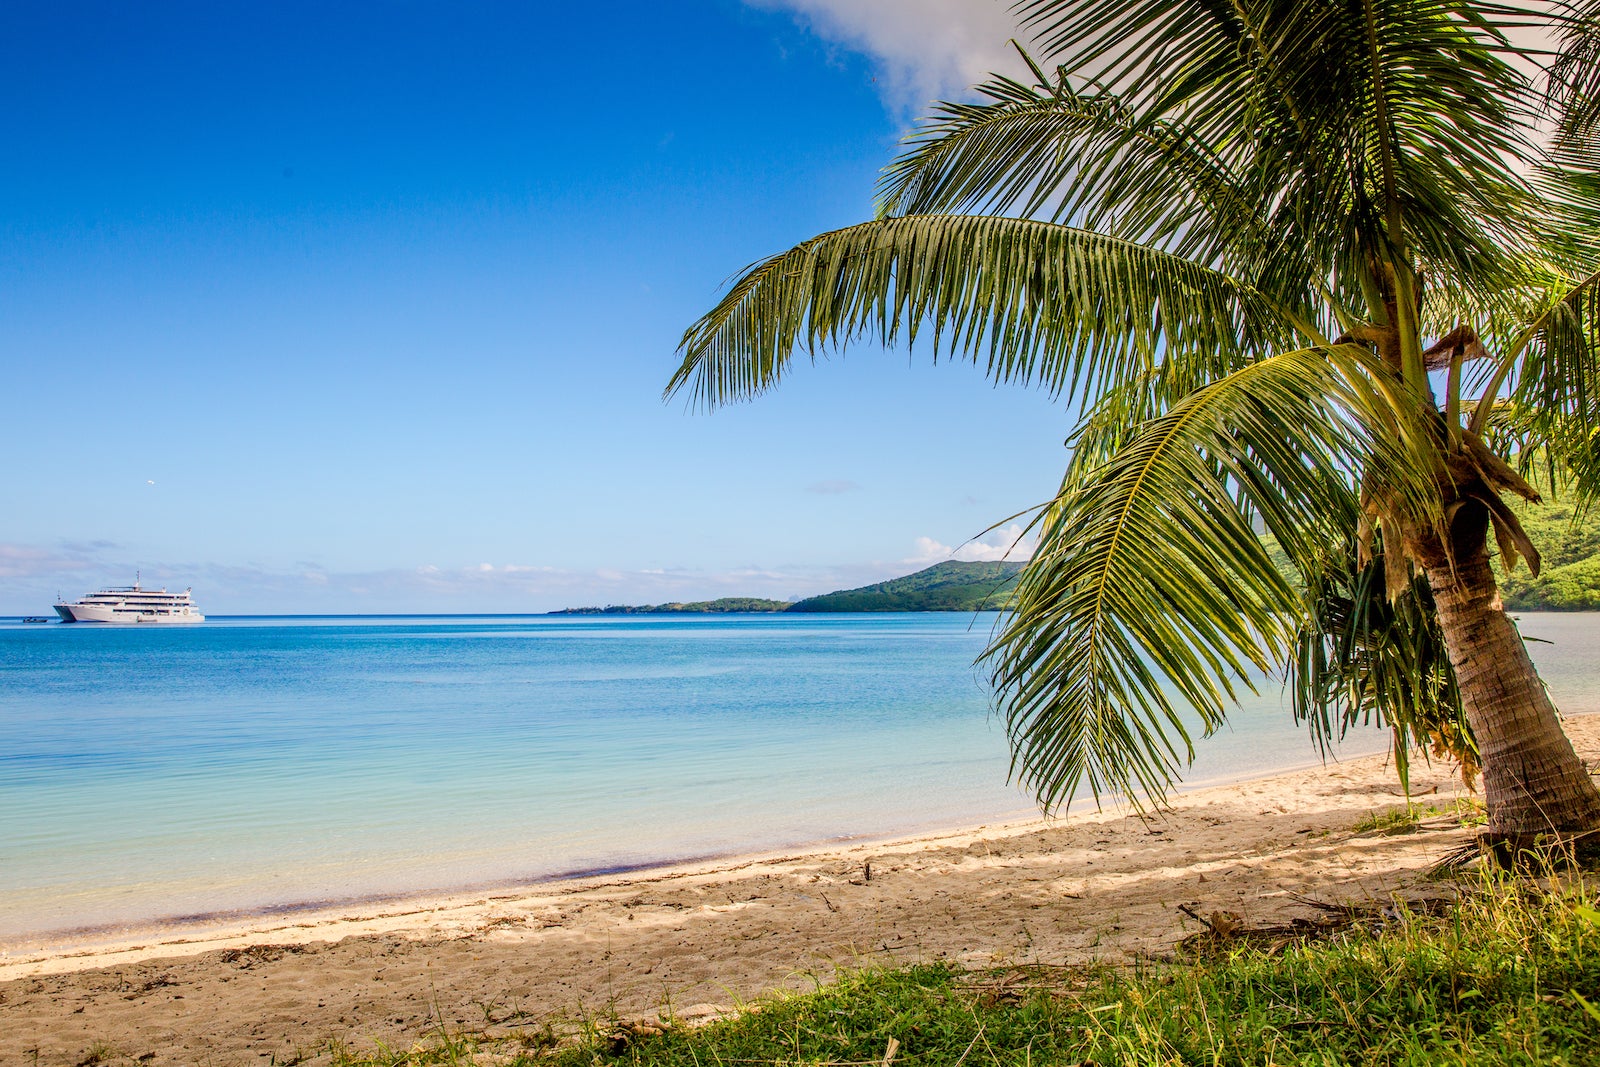 Tropical beach with a palm tree